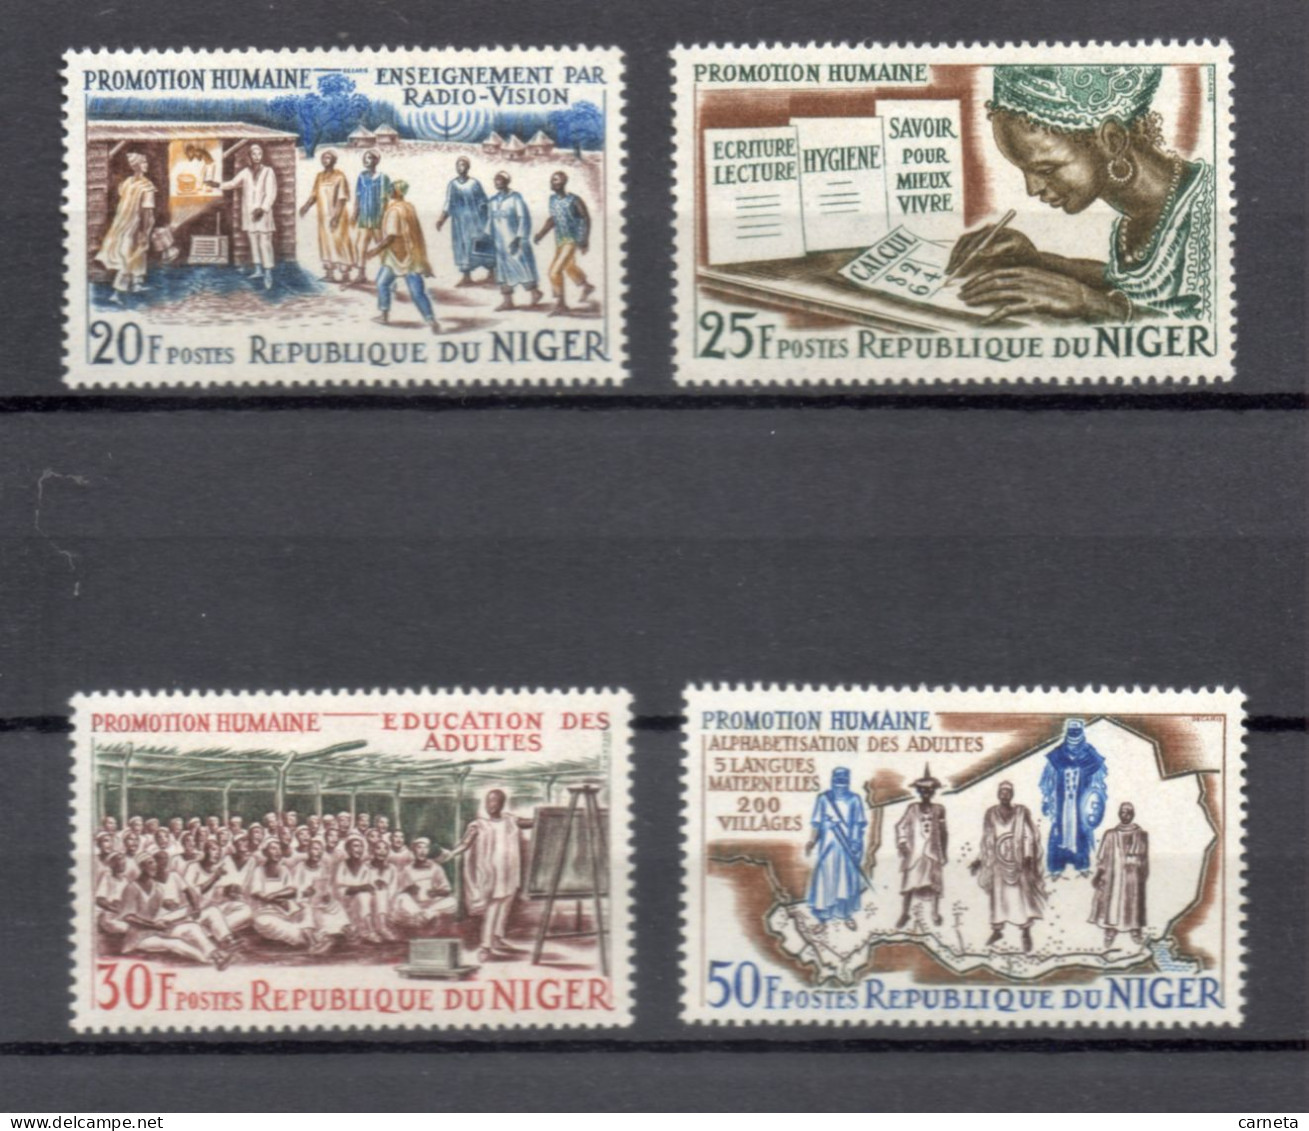 NIGER N° 158 à 161   NEUFS SANS CHARNIERE  COTE 3.60€     PROMOTION HUMAINE - Niger (1960-...)